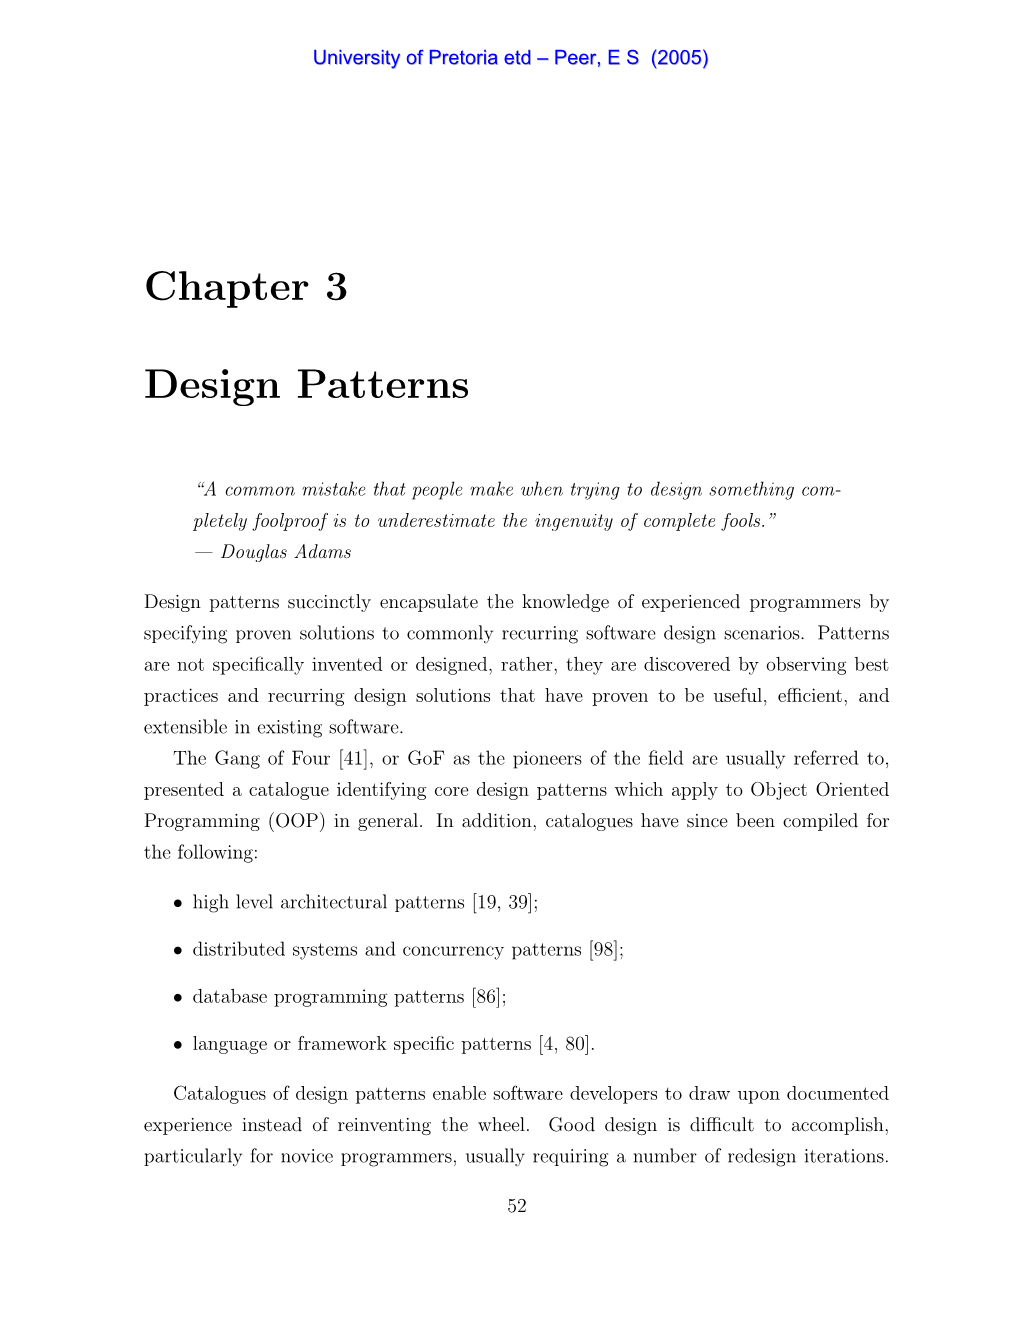 Chapter 3 Design Patterns